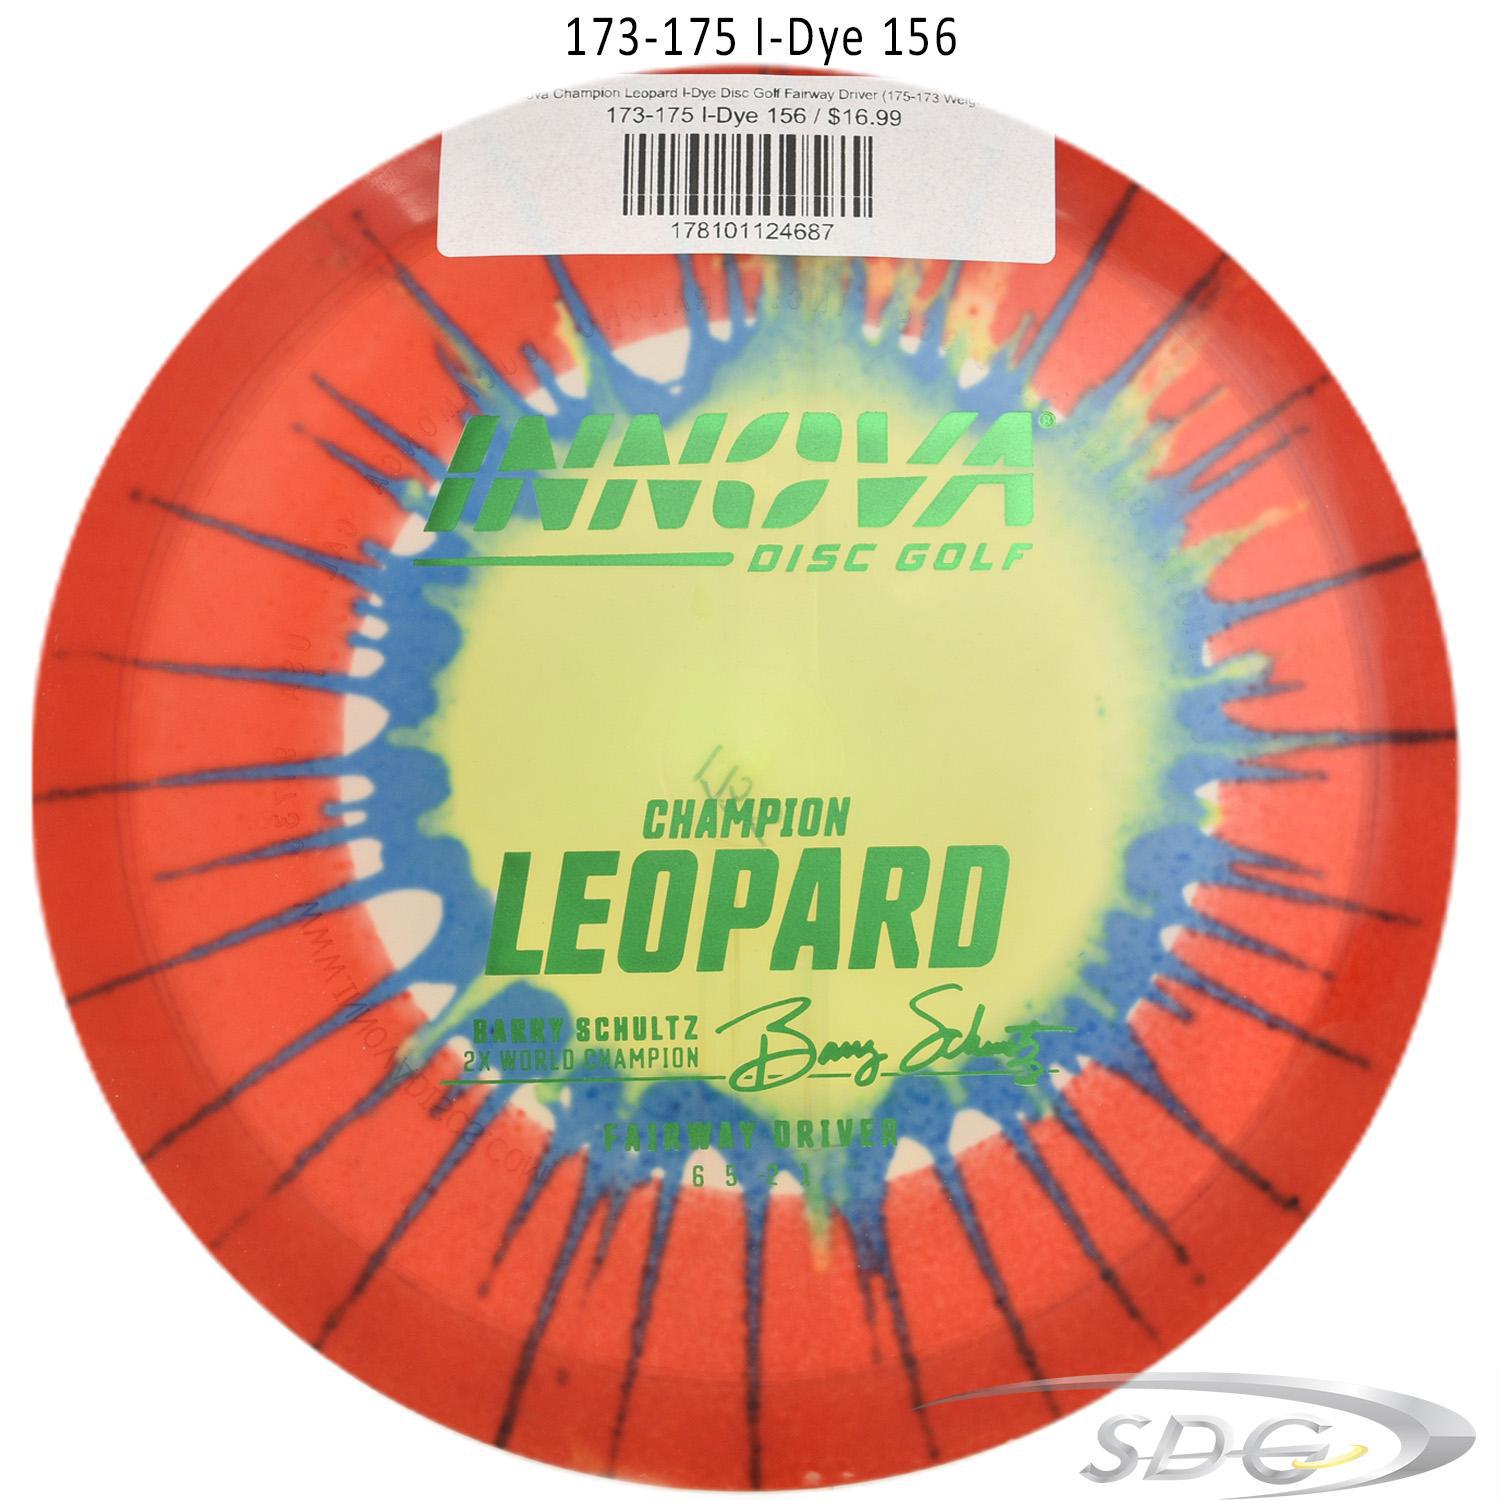 innova-champion-leopard-i-dye-disc-golf-fairway-driver 173-175 I-Dye 156 